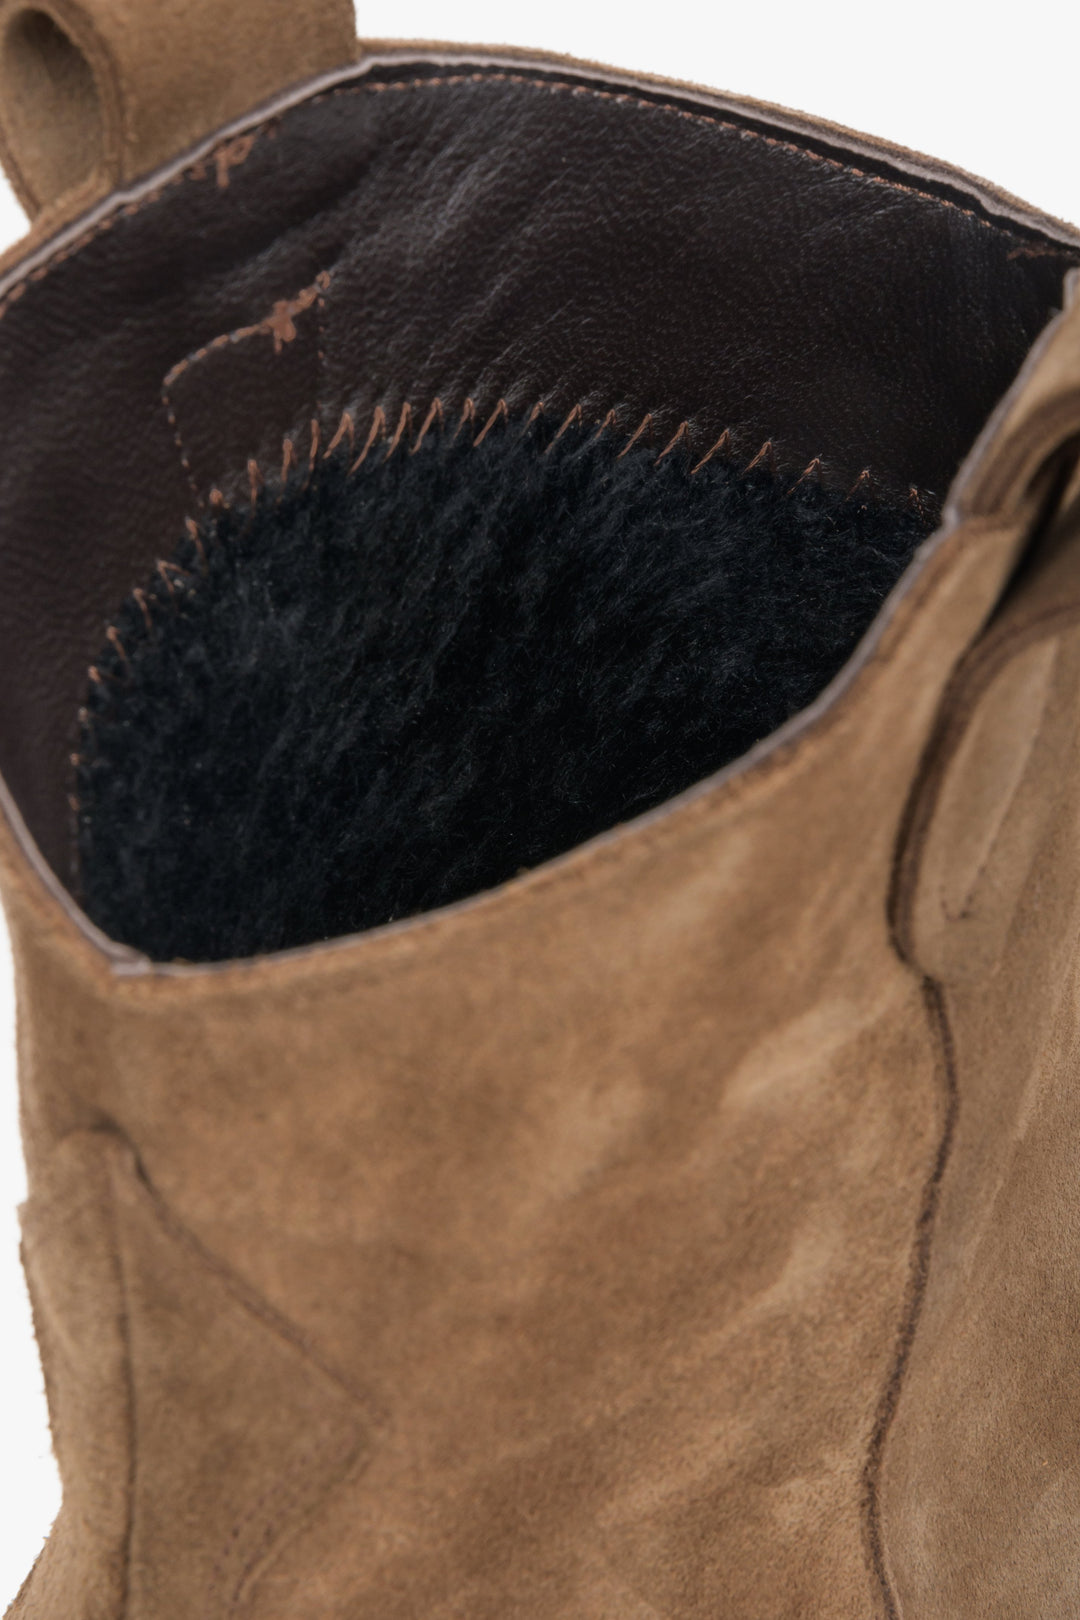 Women's brown velour cowboy boots by Estro - close-up on details.